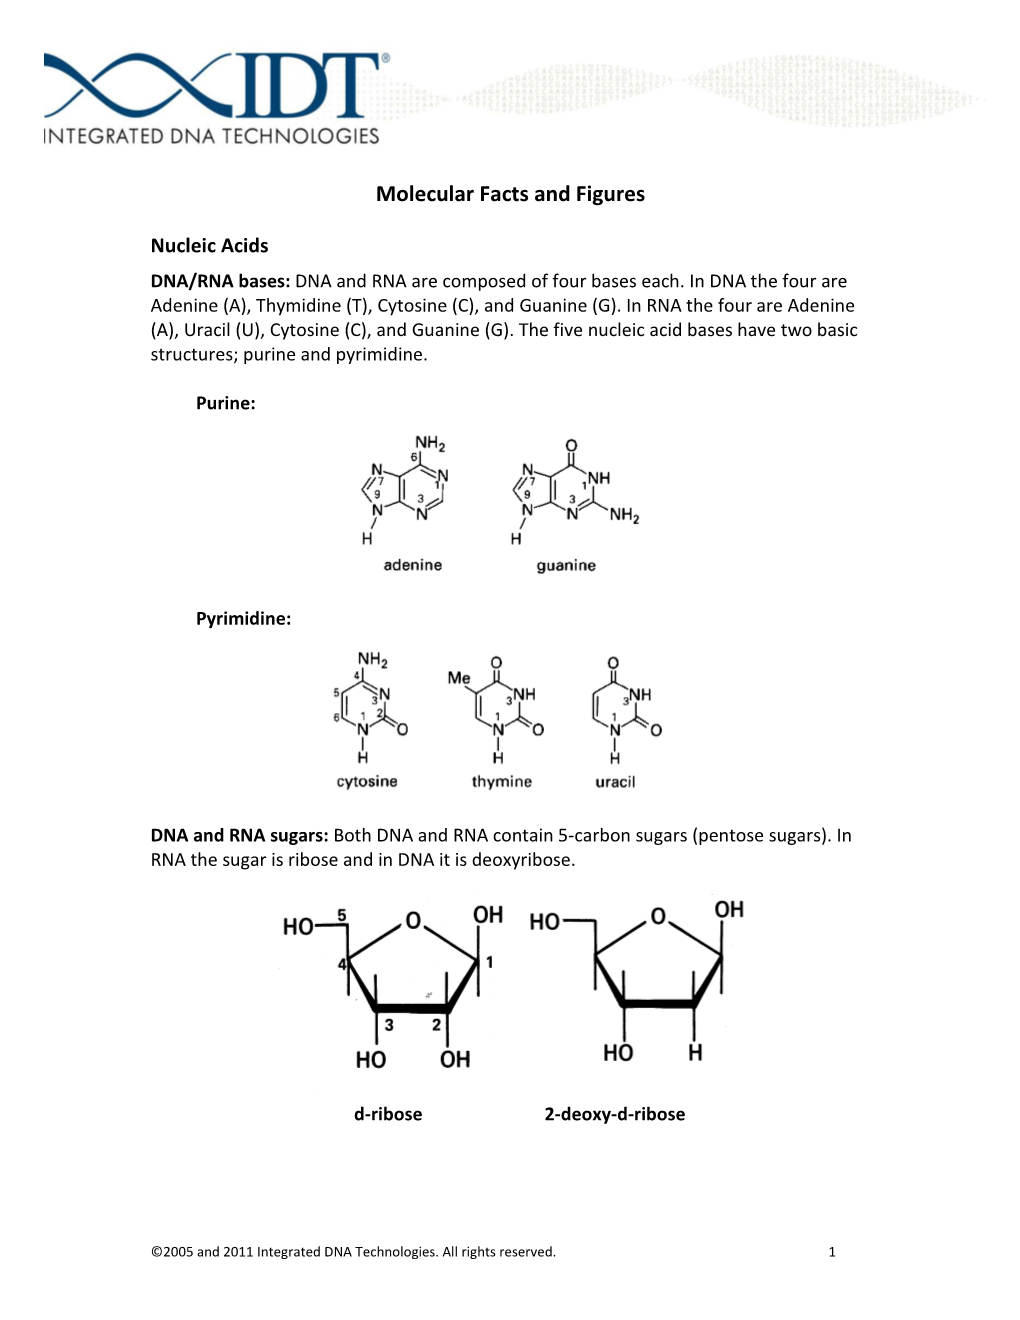 Useful Molecular Facts